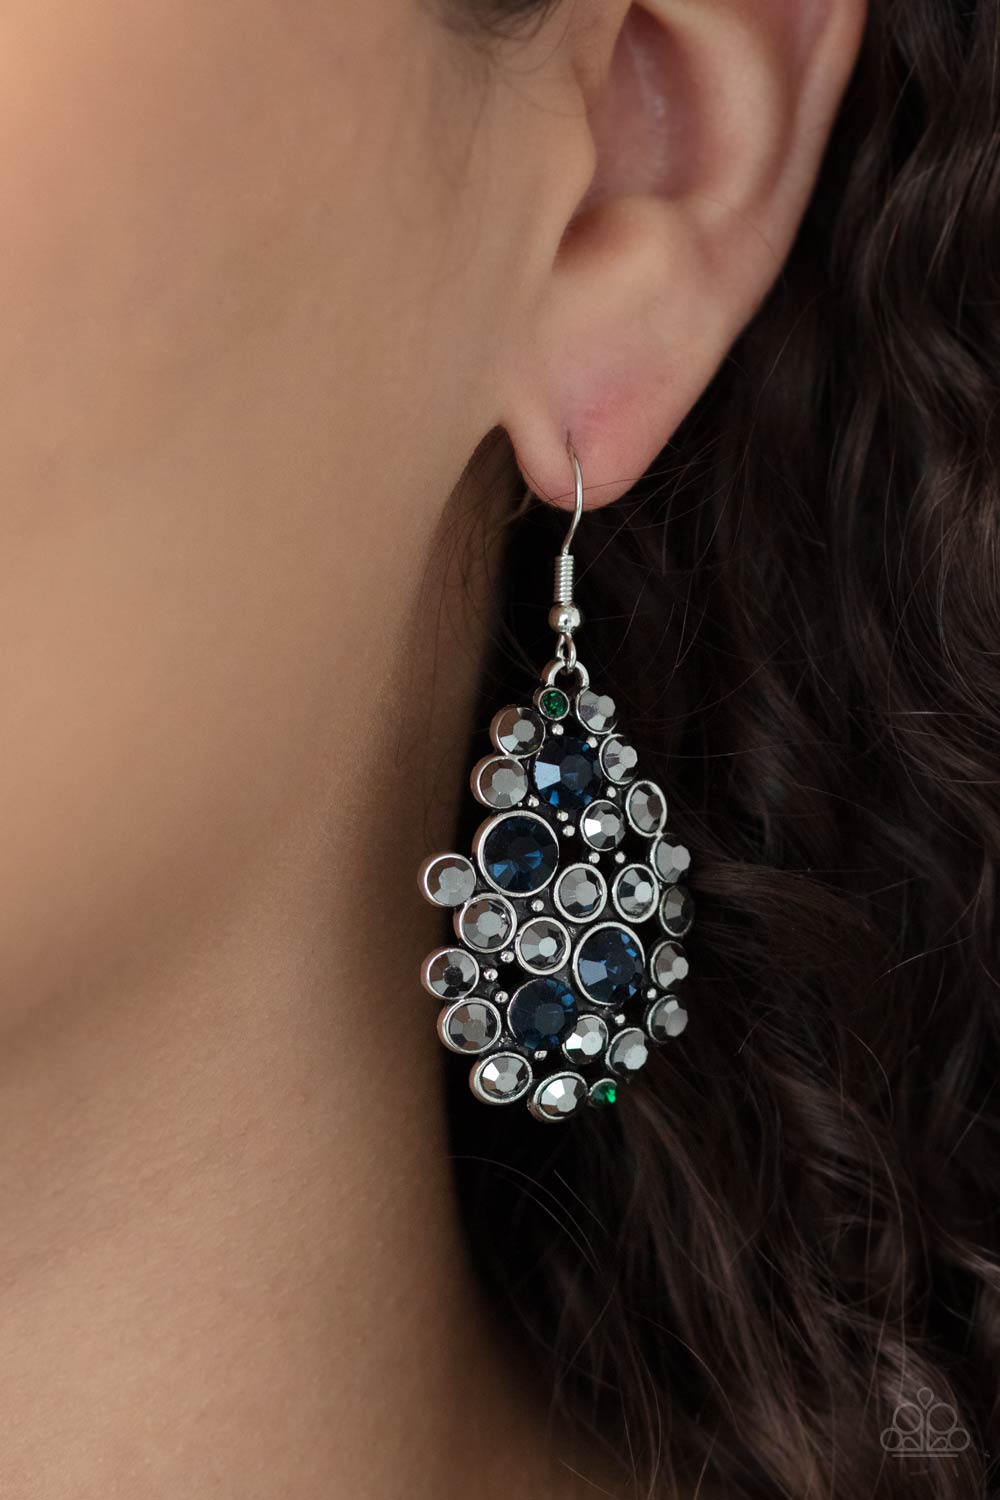 Smolder Effect Multi, Blue, Green and Hematite Rhinestone Earrings - Paparazzi Accessories- lightbox - CarasShop.com - $5 Jewelry by Cara Jewels